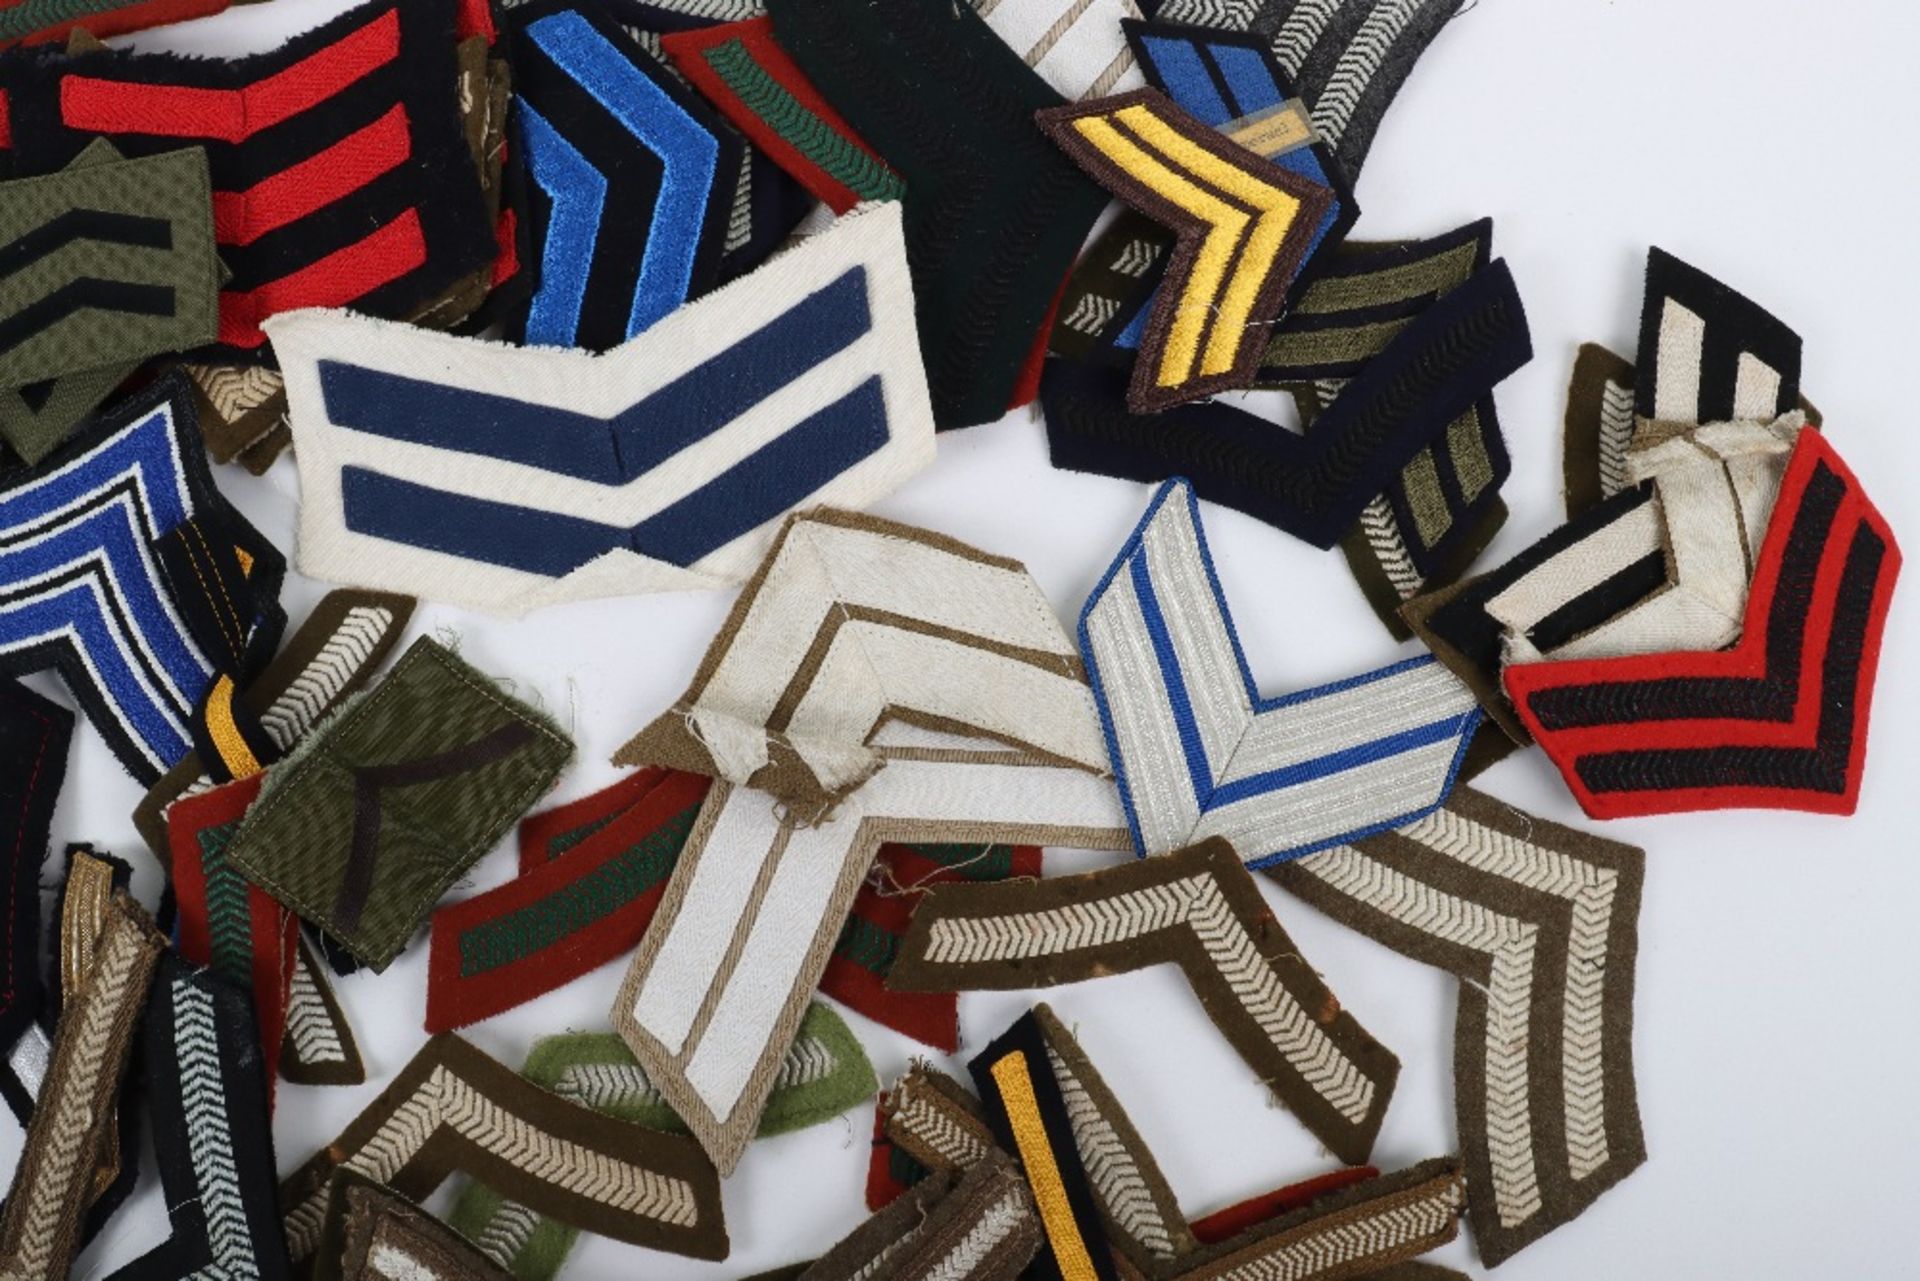 Quantity of British Cloth Rank Stripes - Image 2 of 3